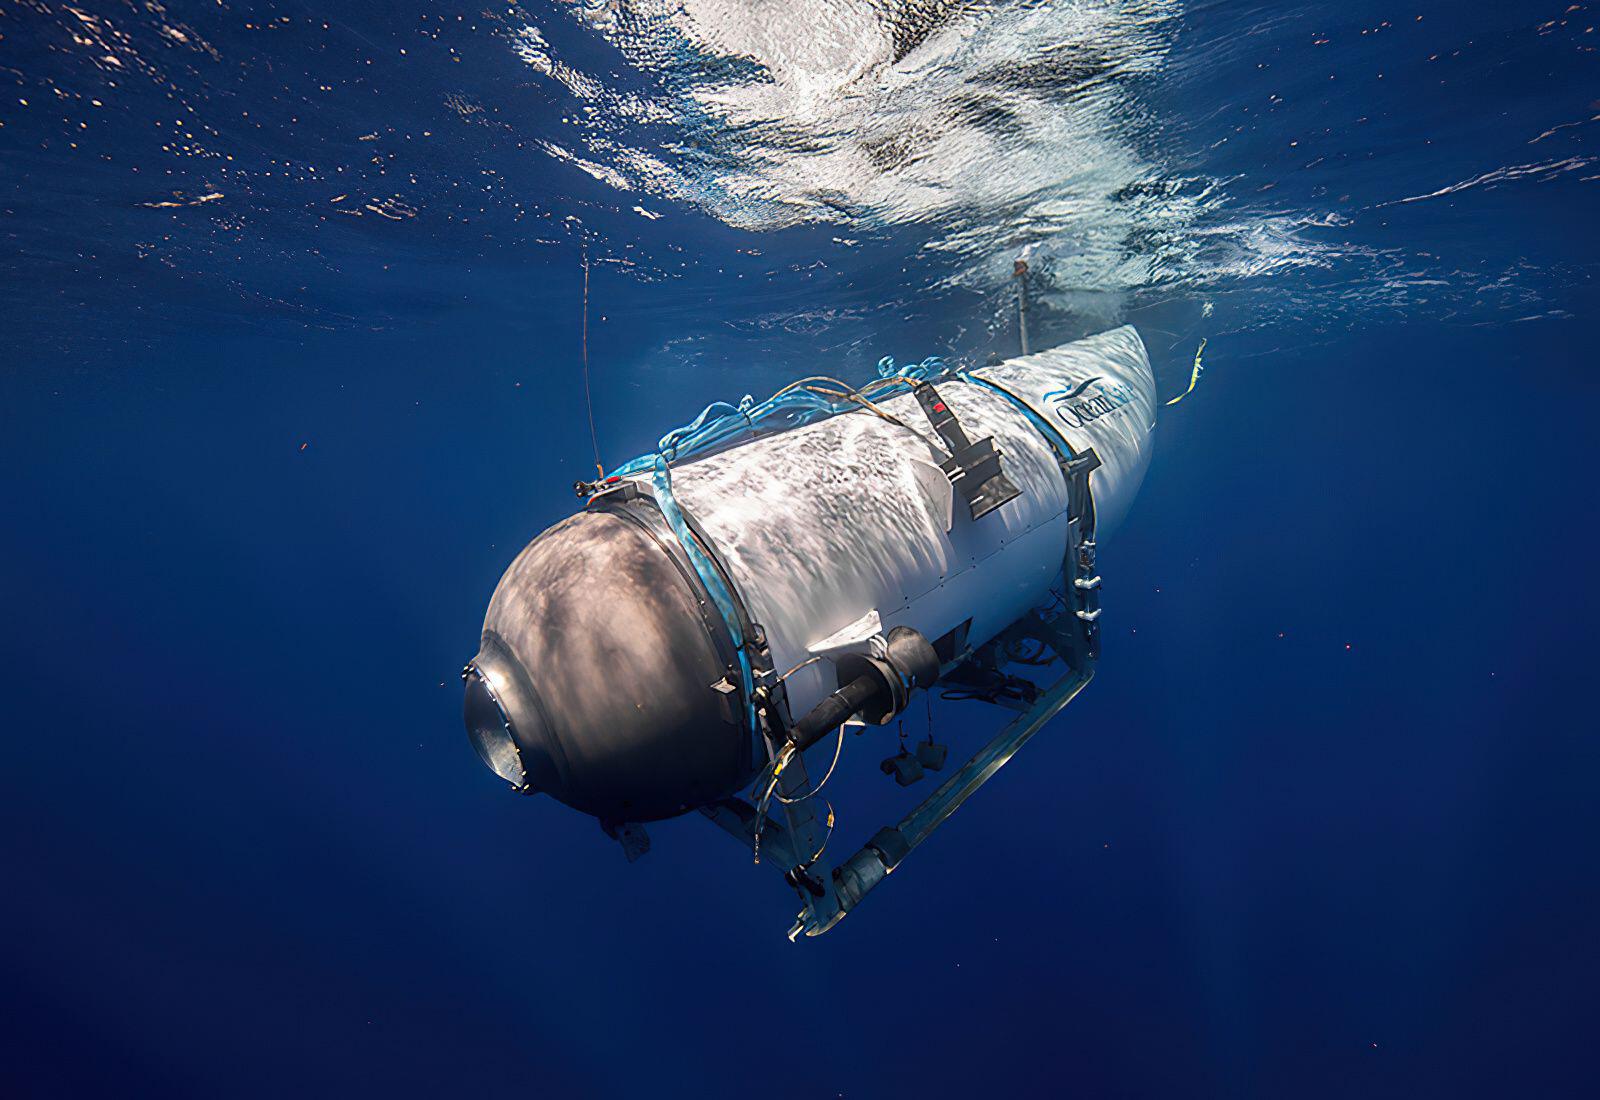 The Oceangate submersible "Titan".